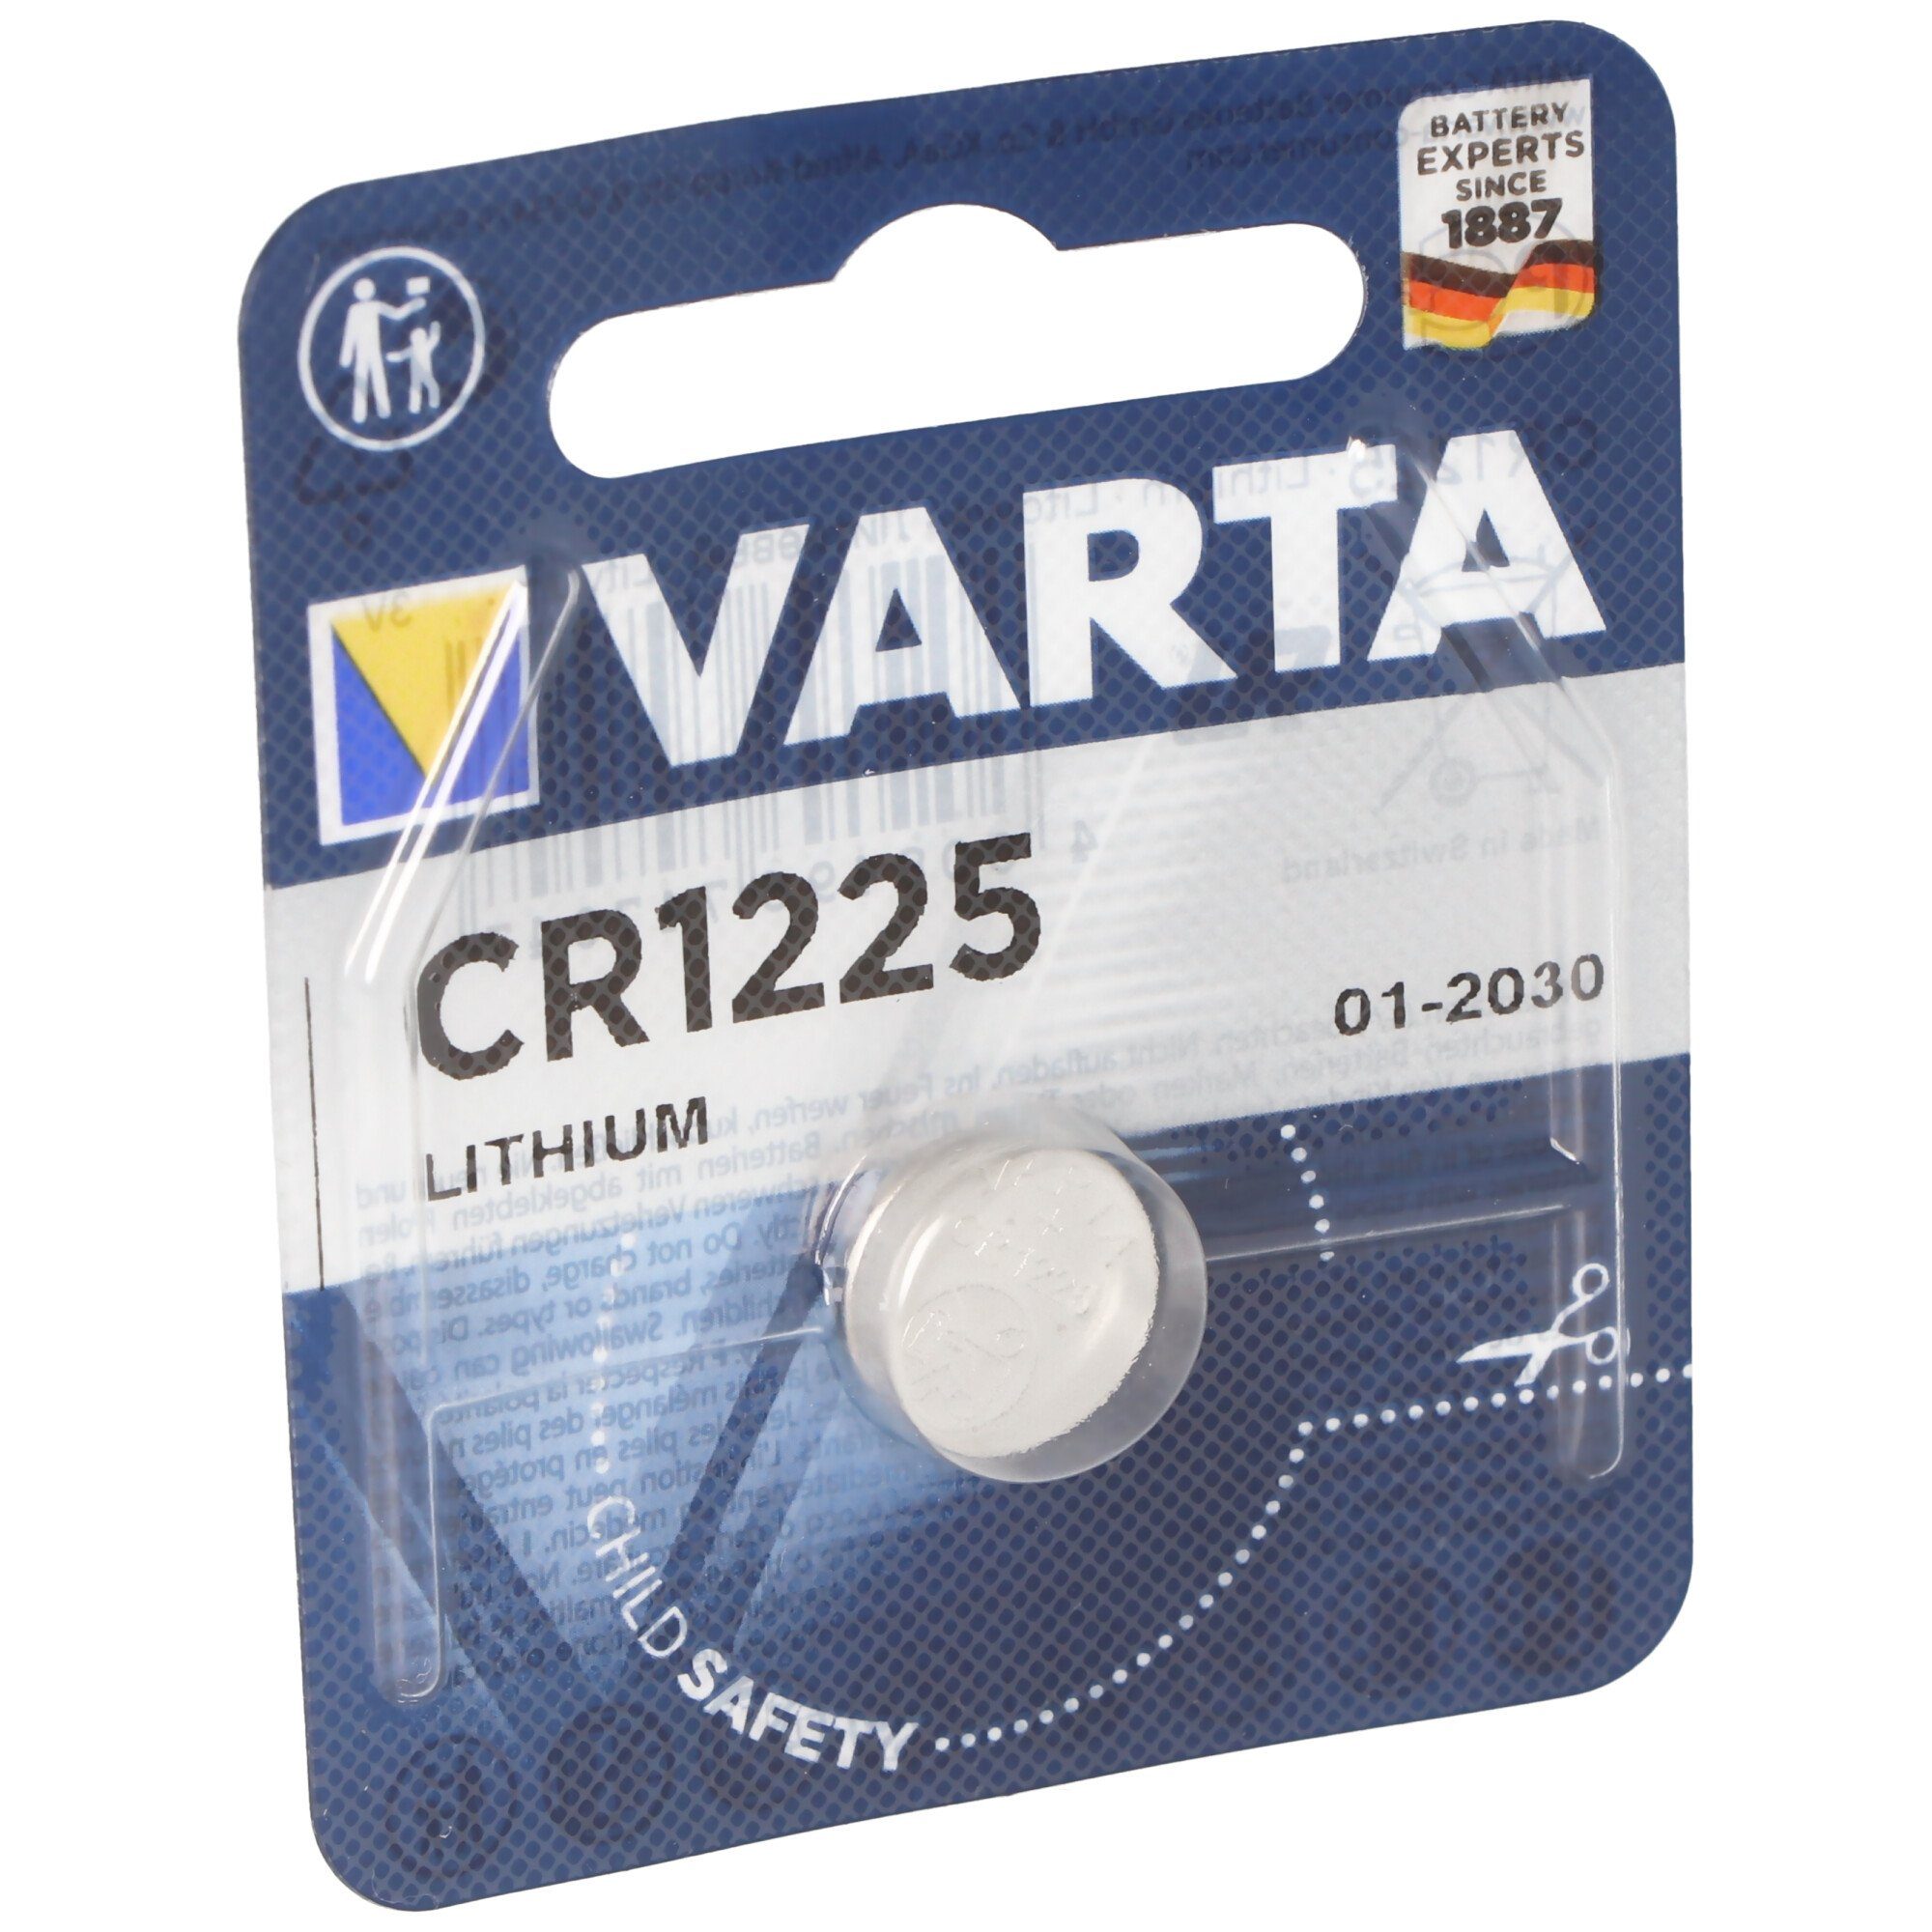 122 VARTA (3,0 Batterie Electronics CR1225 06225101401 Professional Varta CR Batterie, IEC V)